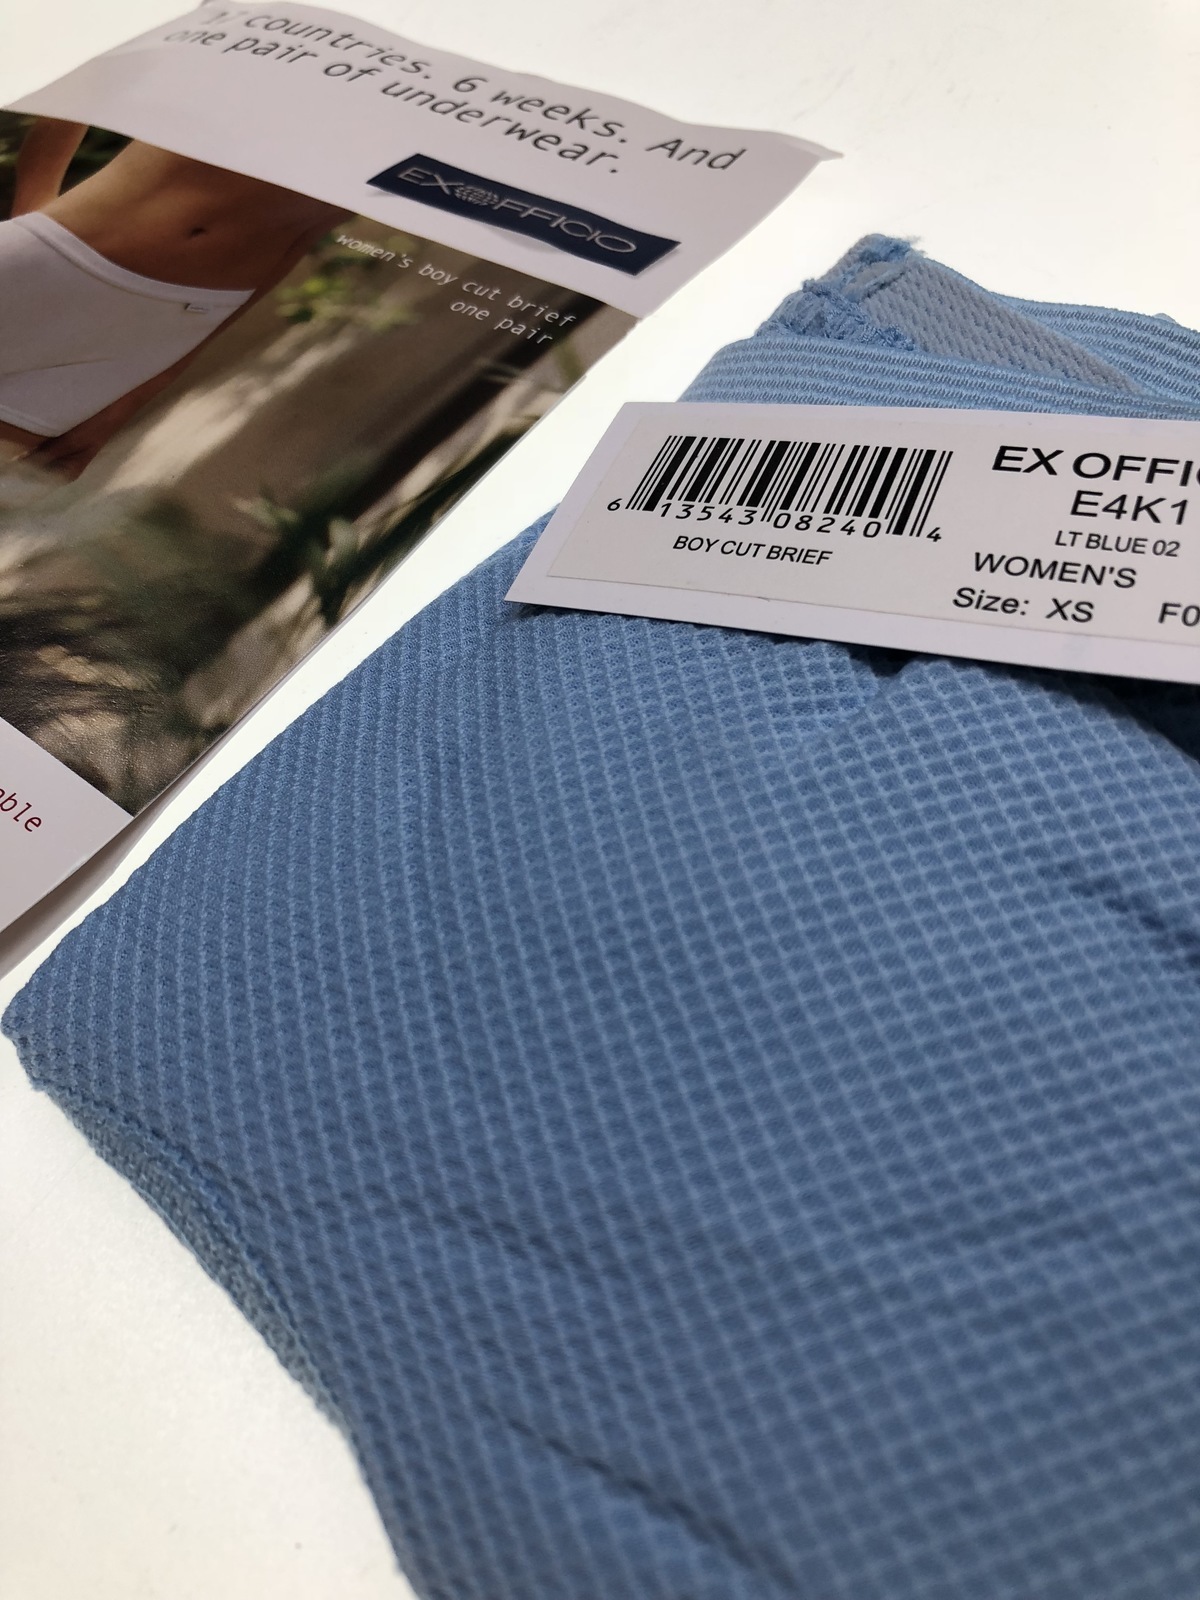 ExOfficio Give-N-Go Full Cut Brief Briefs Underwear Panties Womens